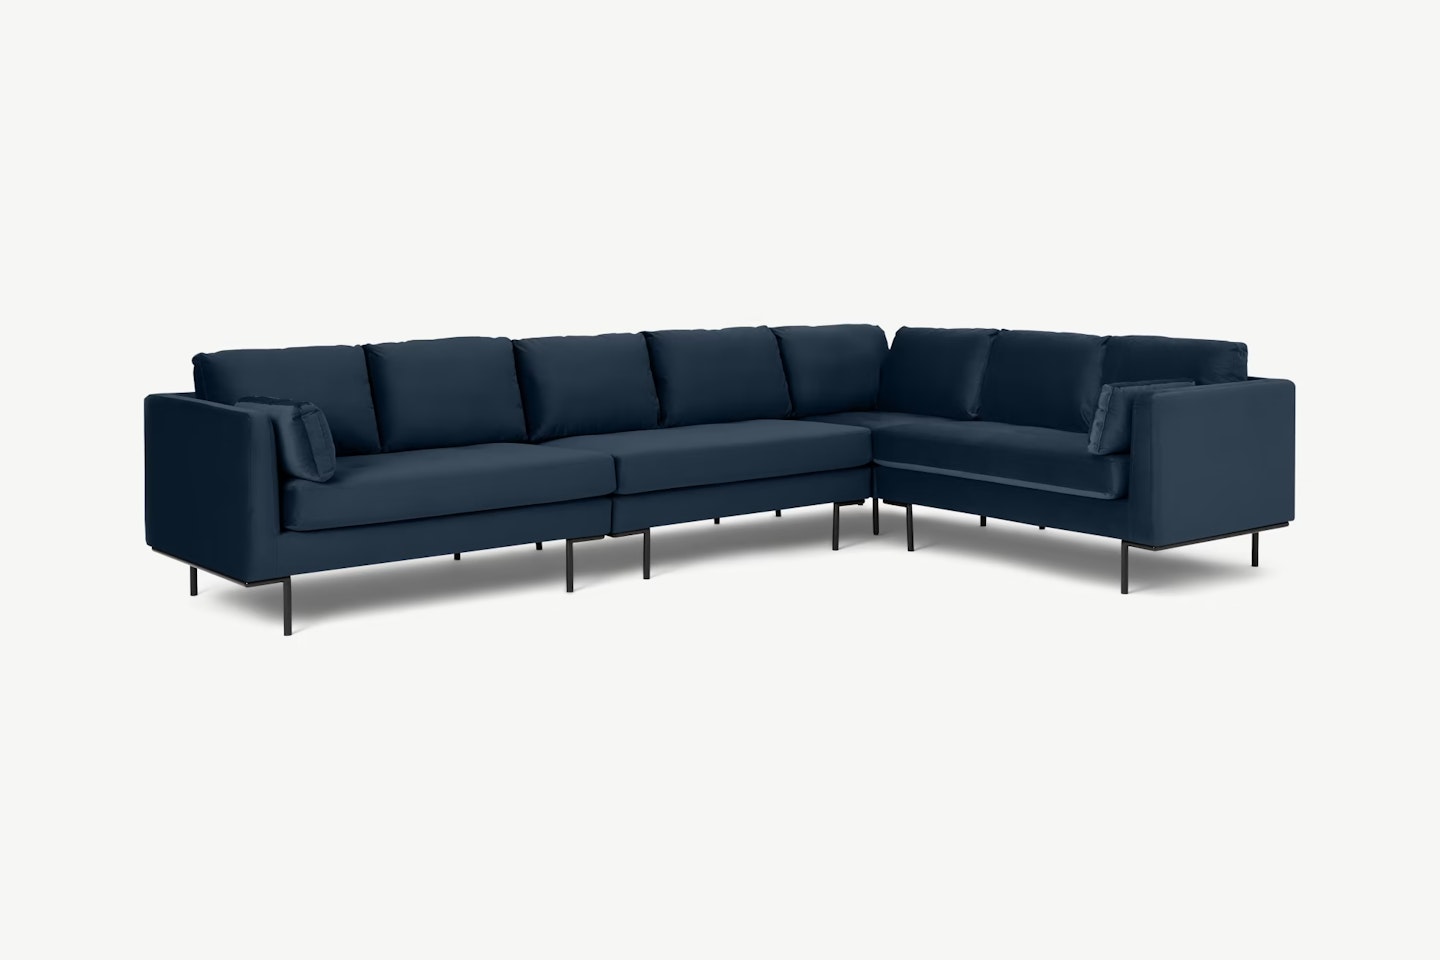 Harlow 4 Seater Right Hand Facing Corner Dining Sofa, Ocean Blue Recycled Velvet